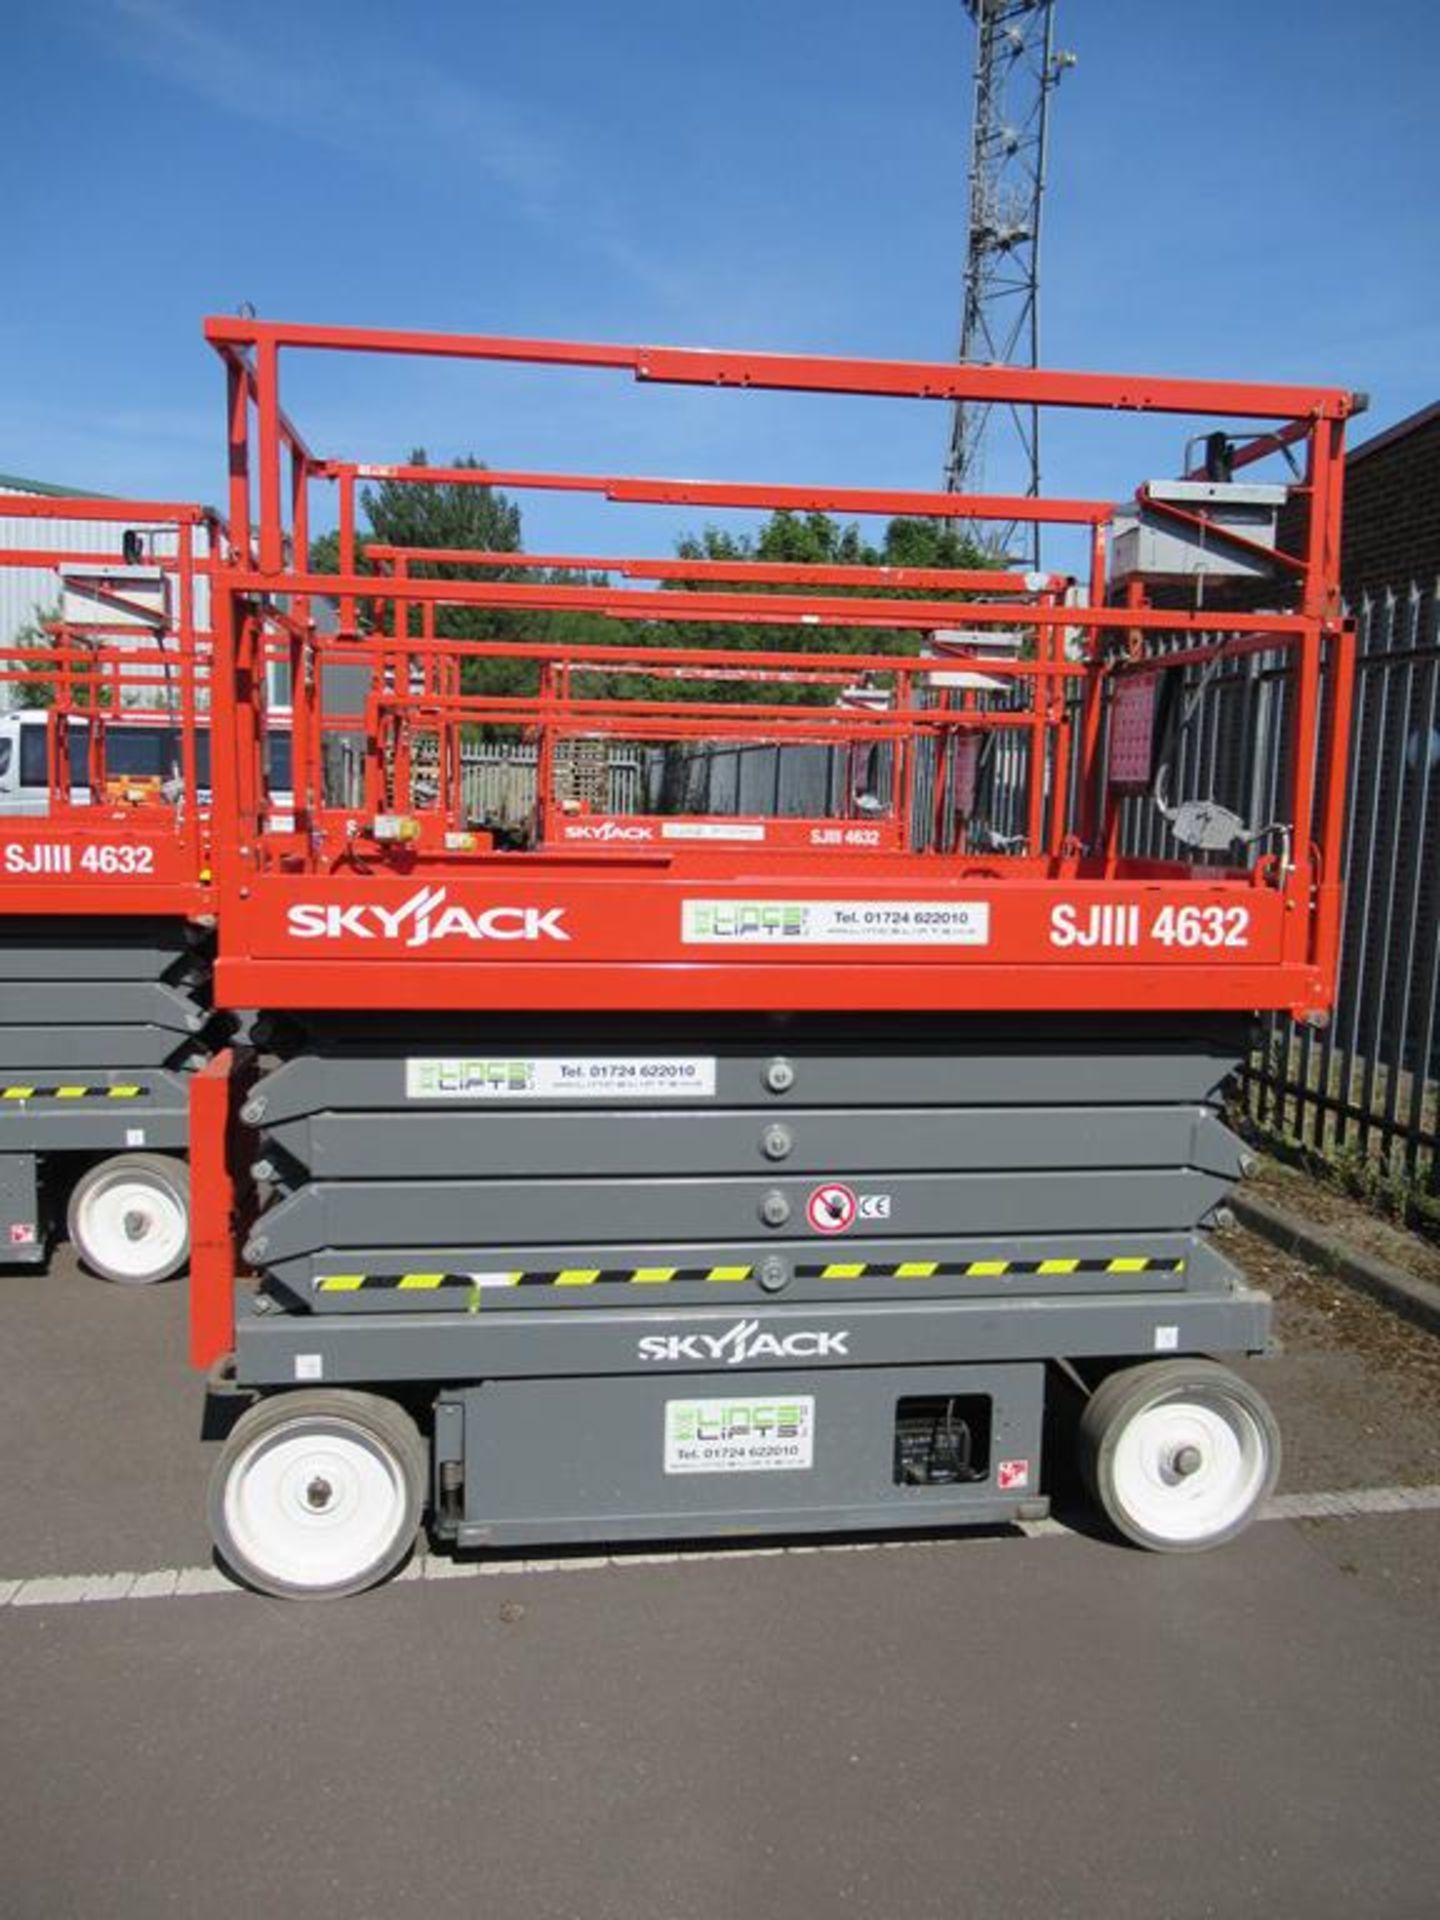 Skyjack SJ111 4632 24V electrical scissor lift